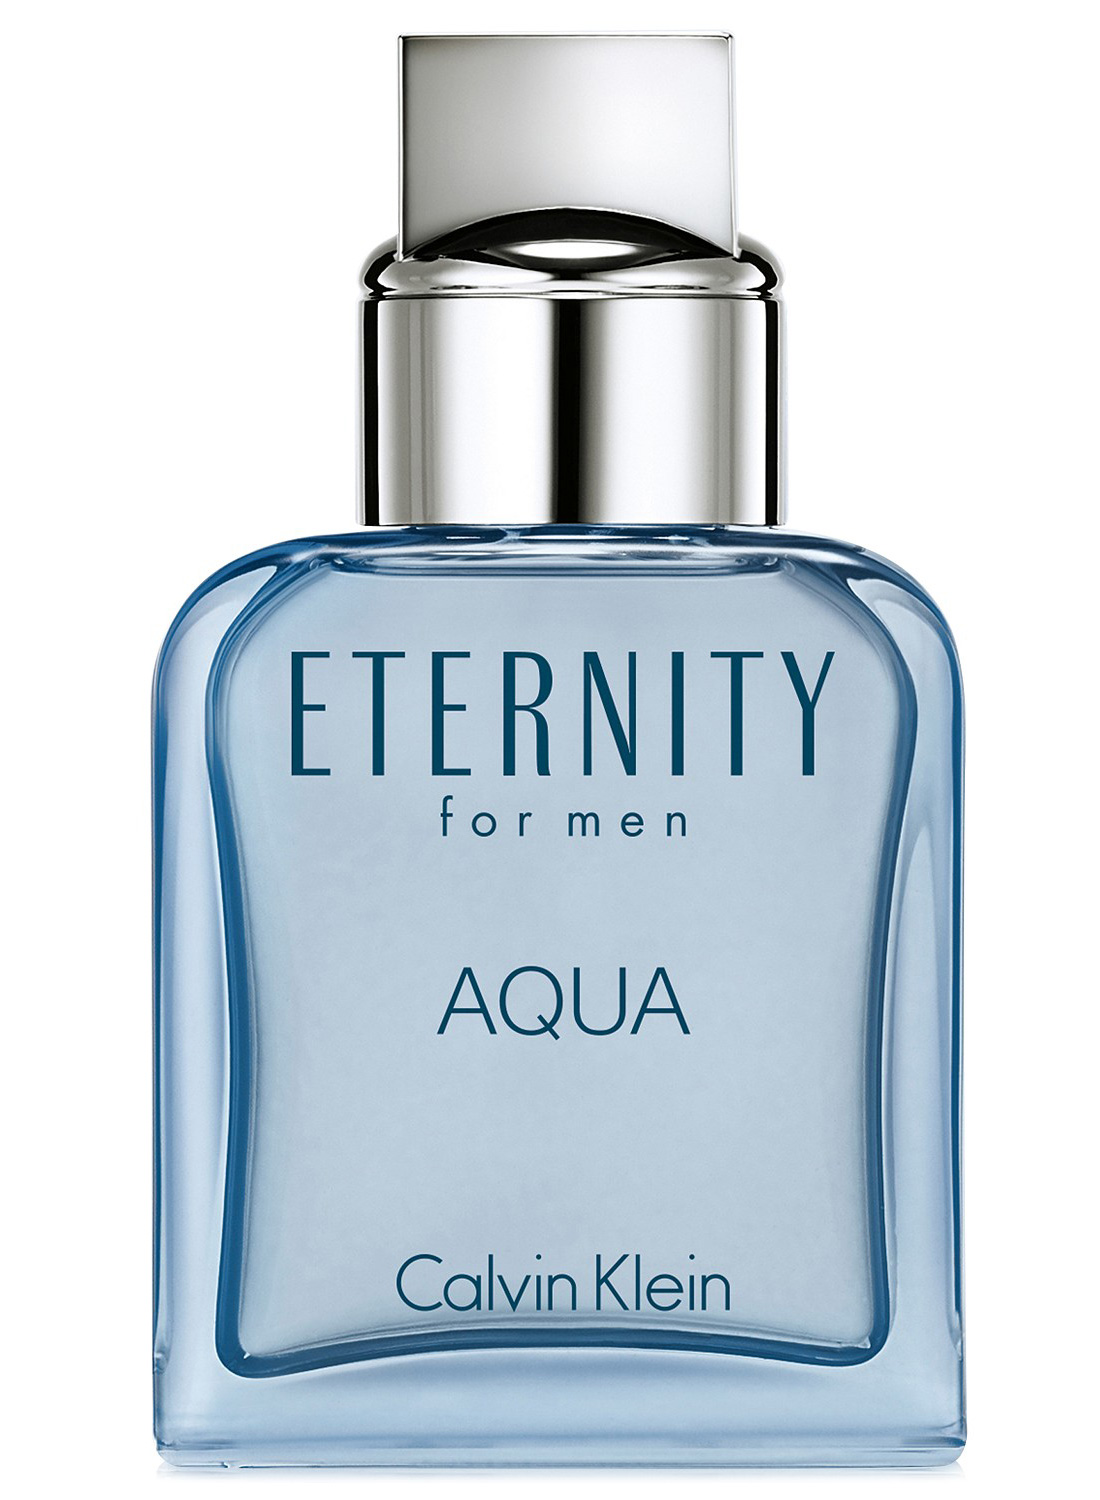 Eternity Aqua for Men Calvin Klein cologne - a fragrance for men 2010